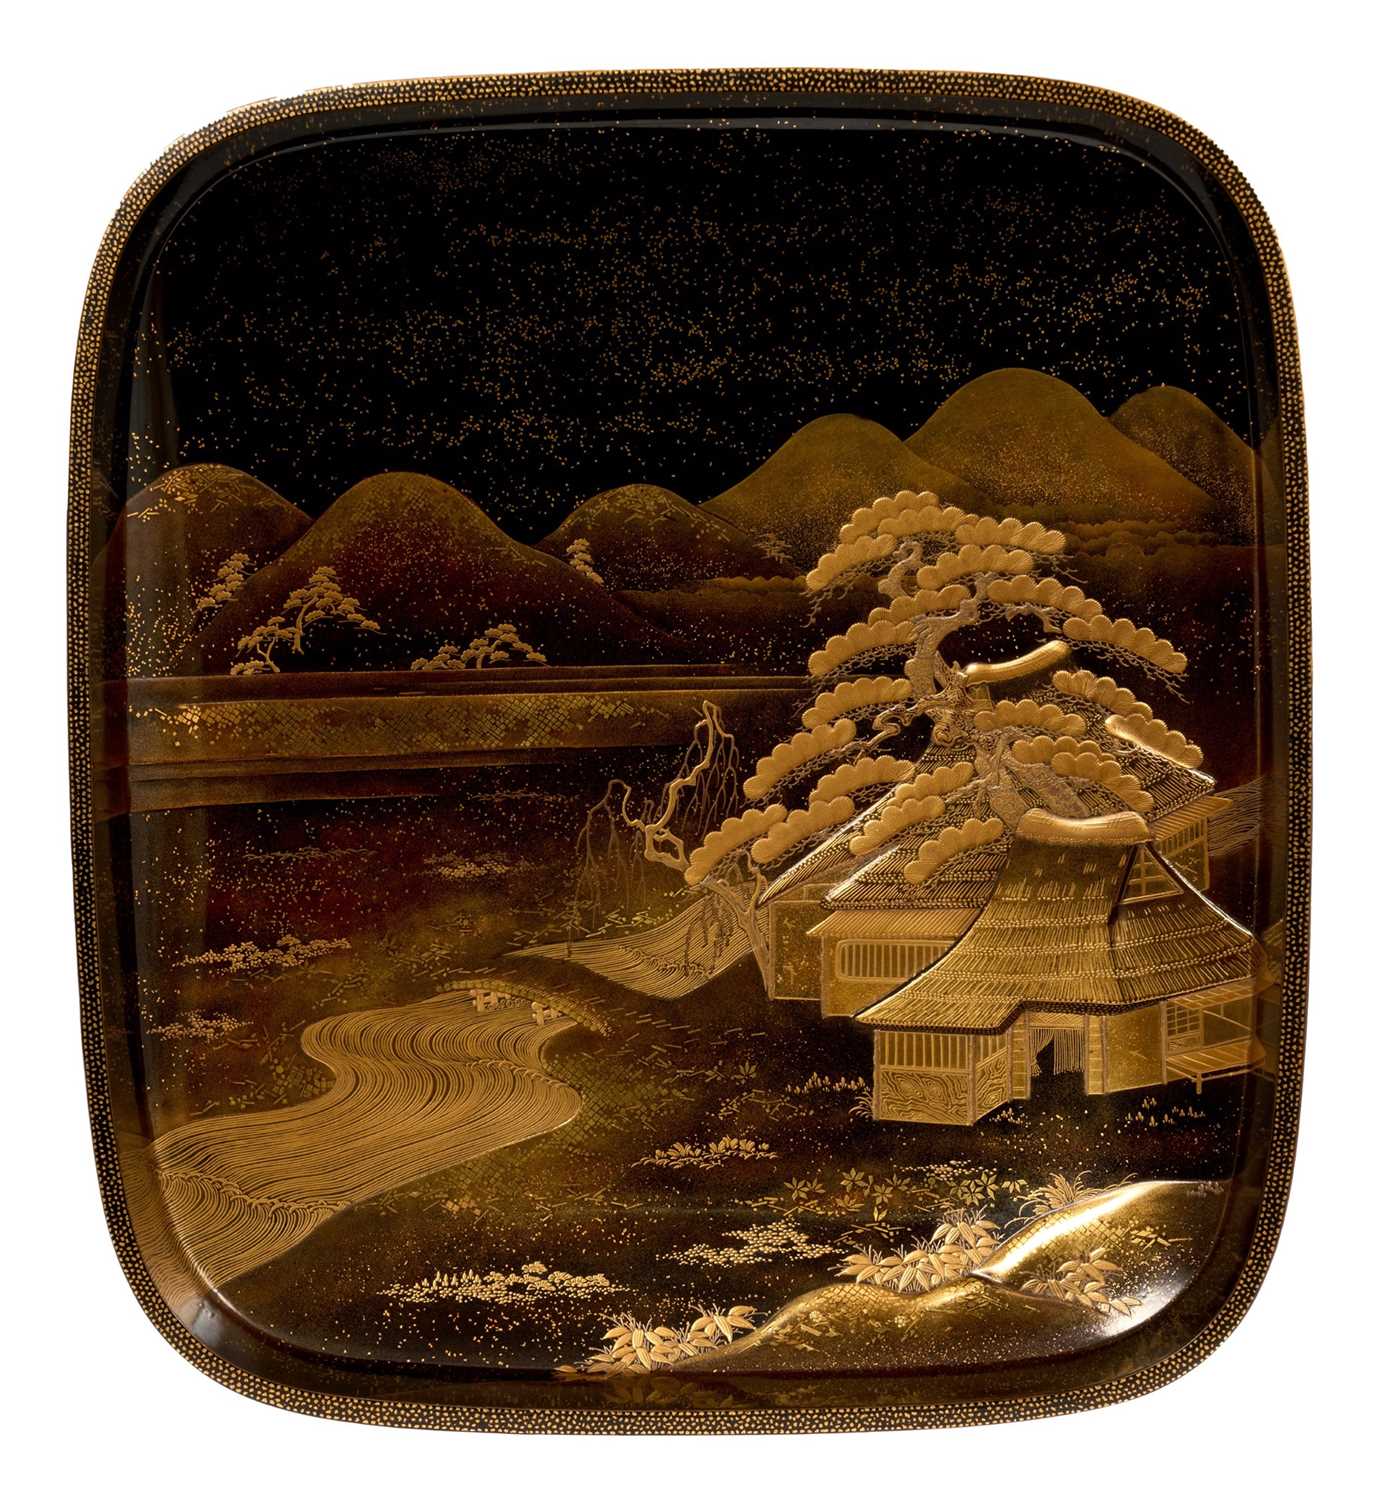 Superb matching set of a gold lacquer ryoshibako and suzuribako, Meiji Period - Image 11 of 18